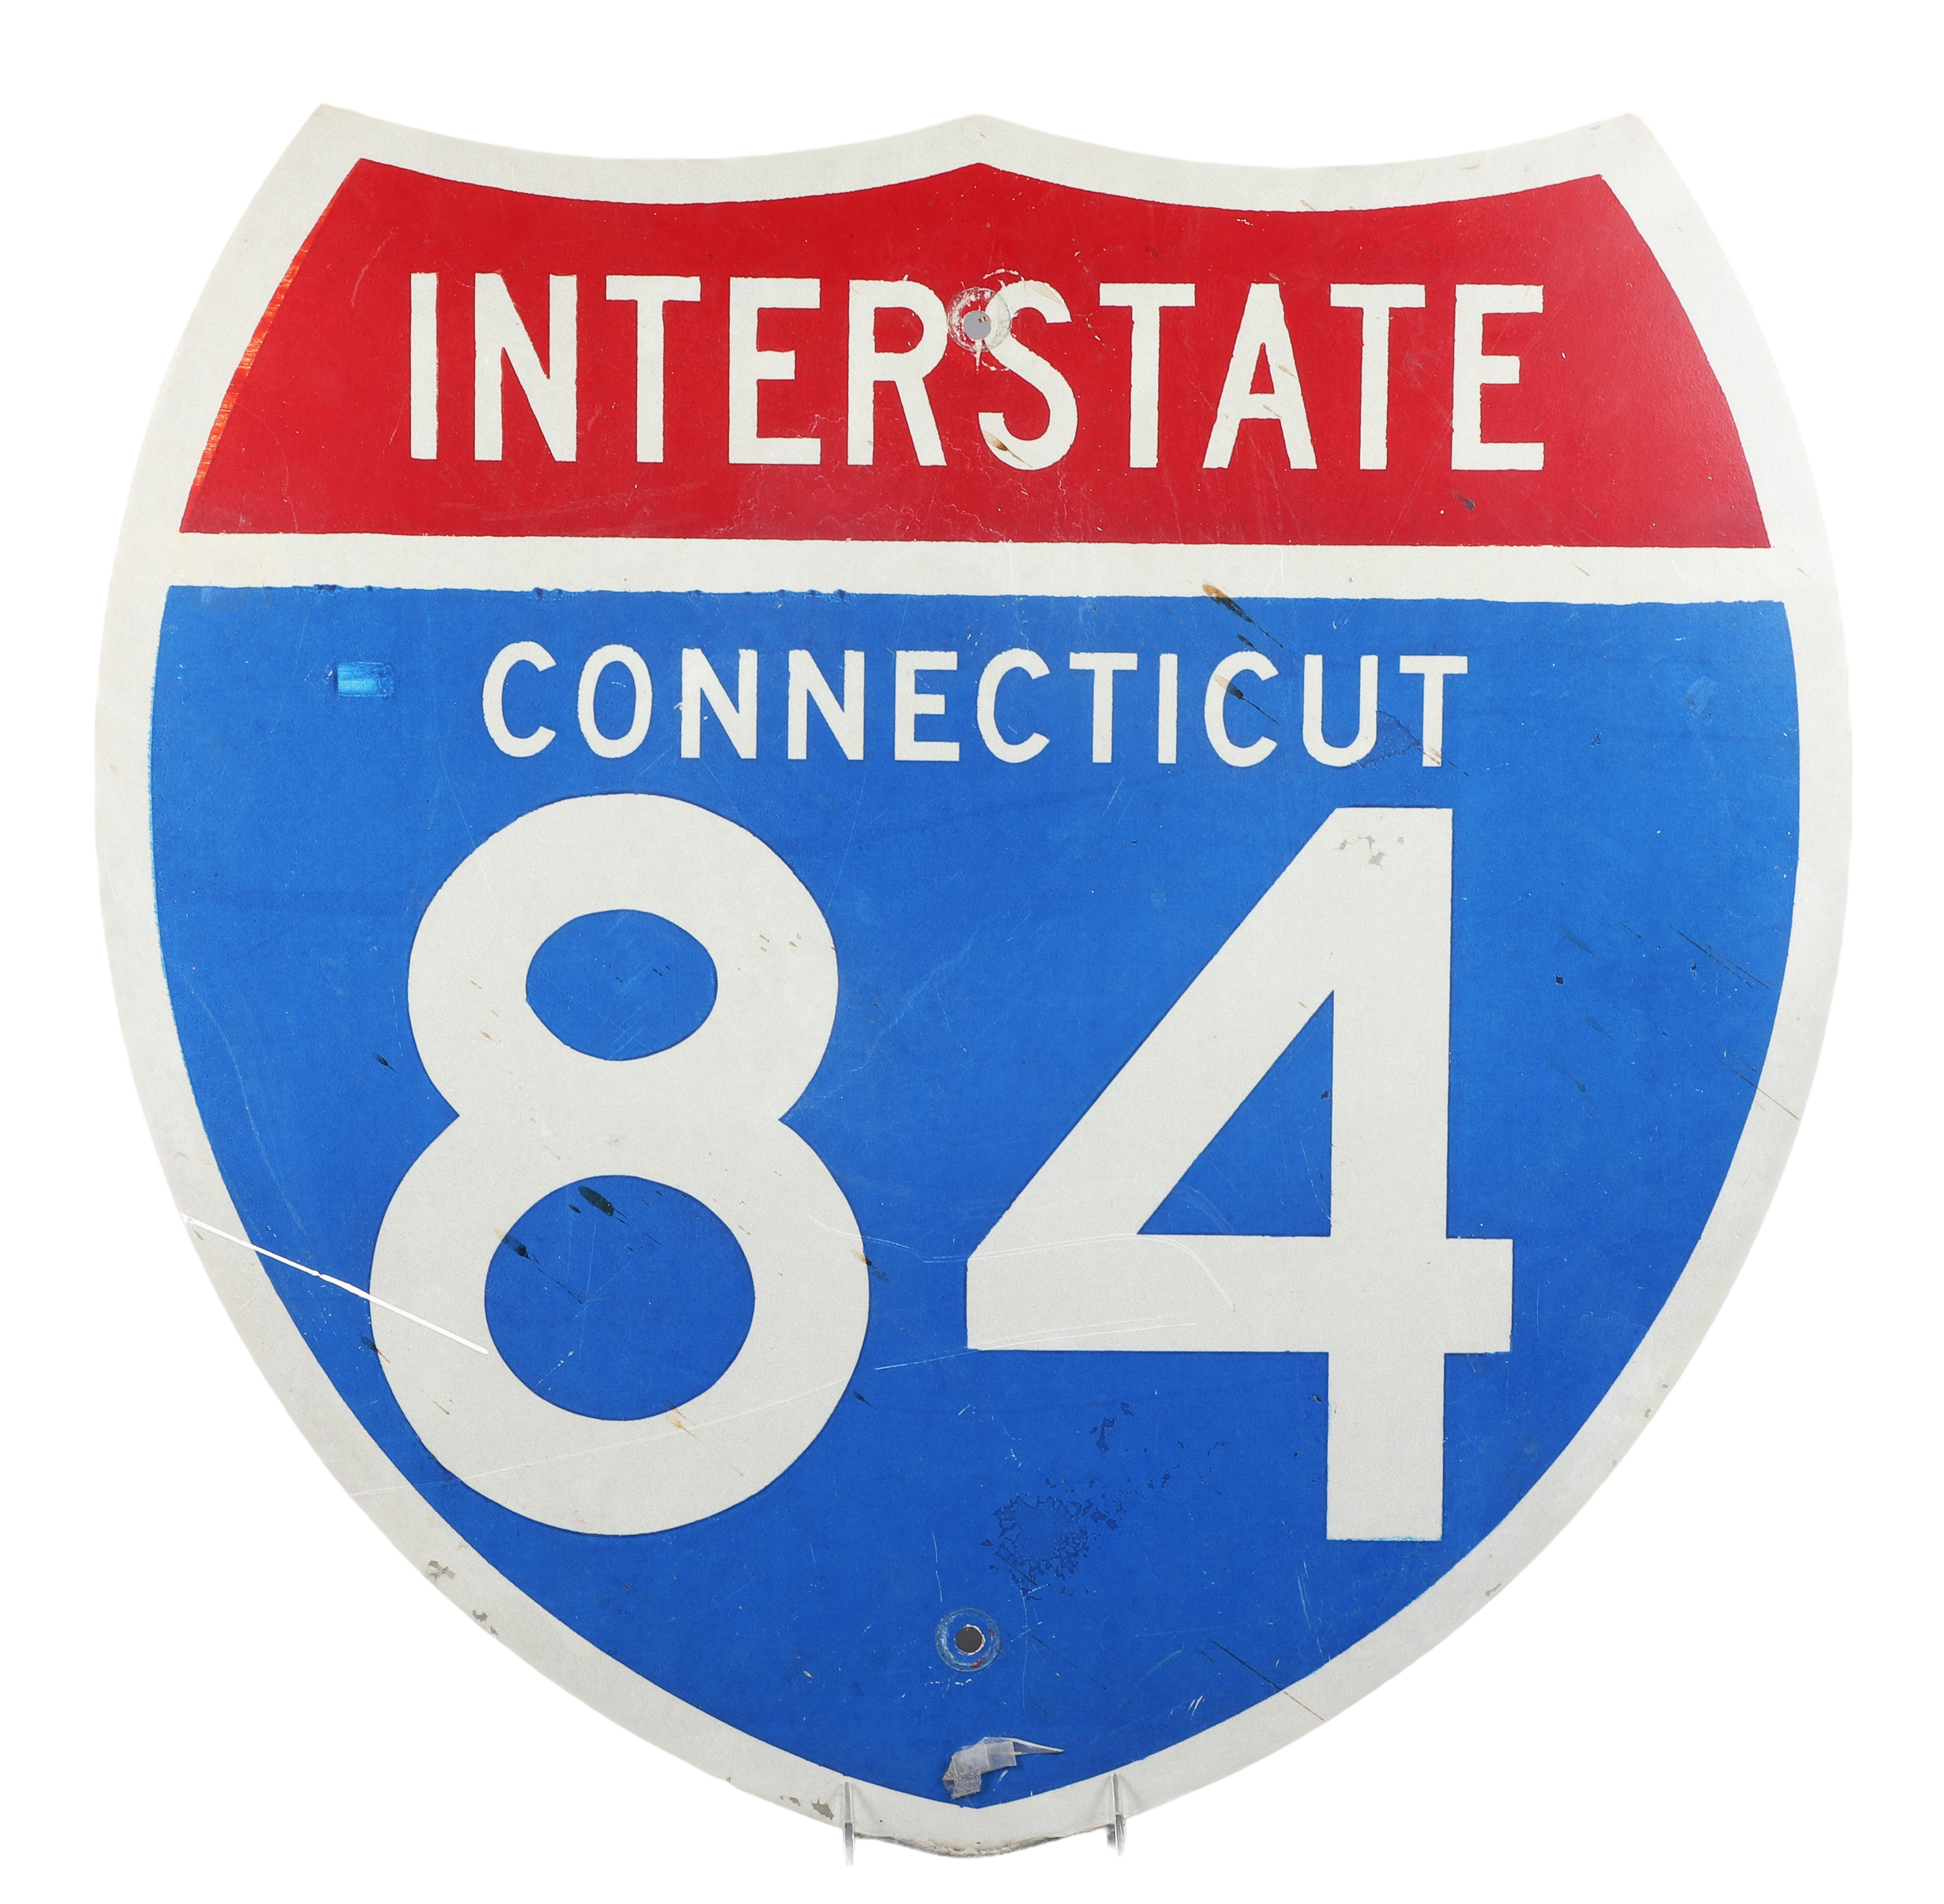 Connecticut Interstate 84 highway